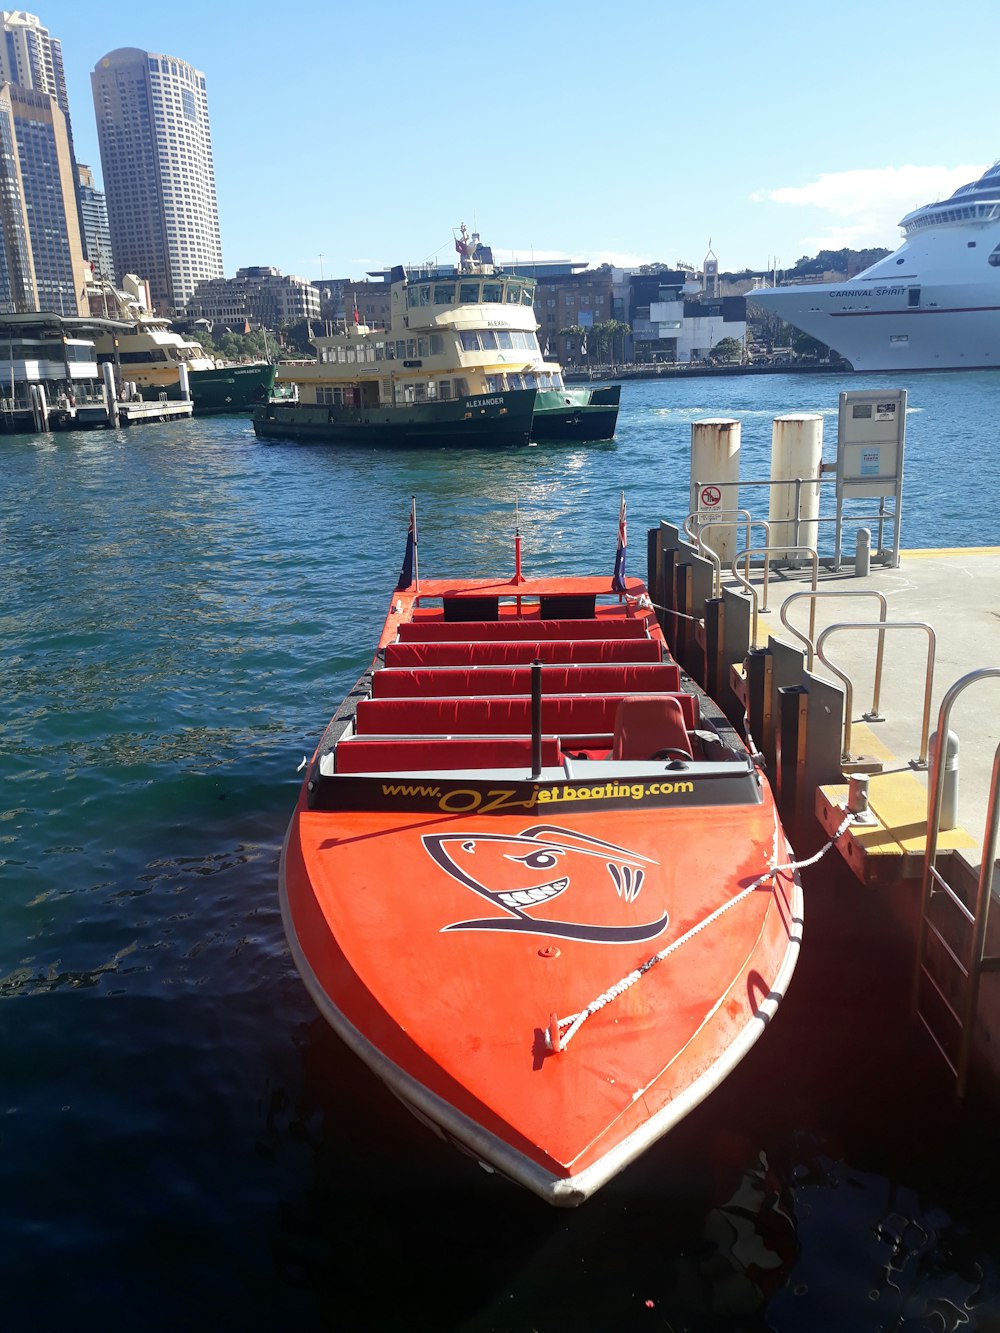 barco a motor laranja e branco ao lado do cais